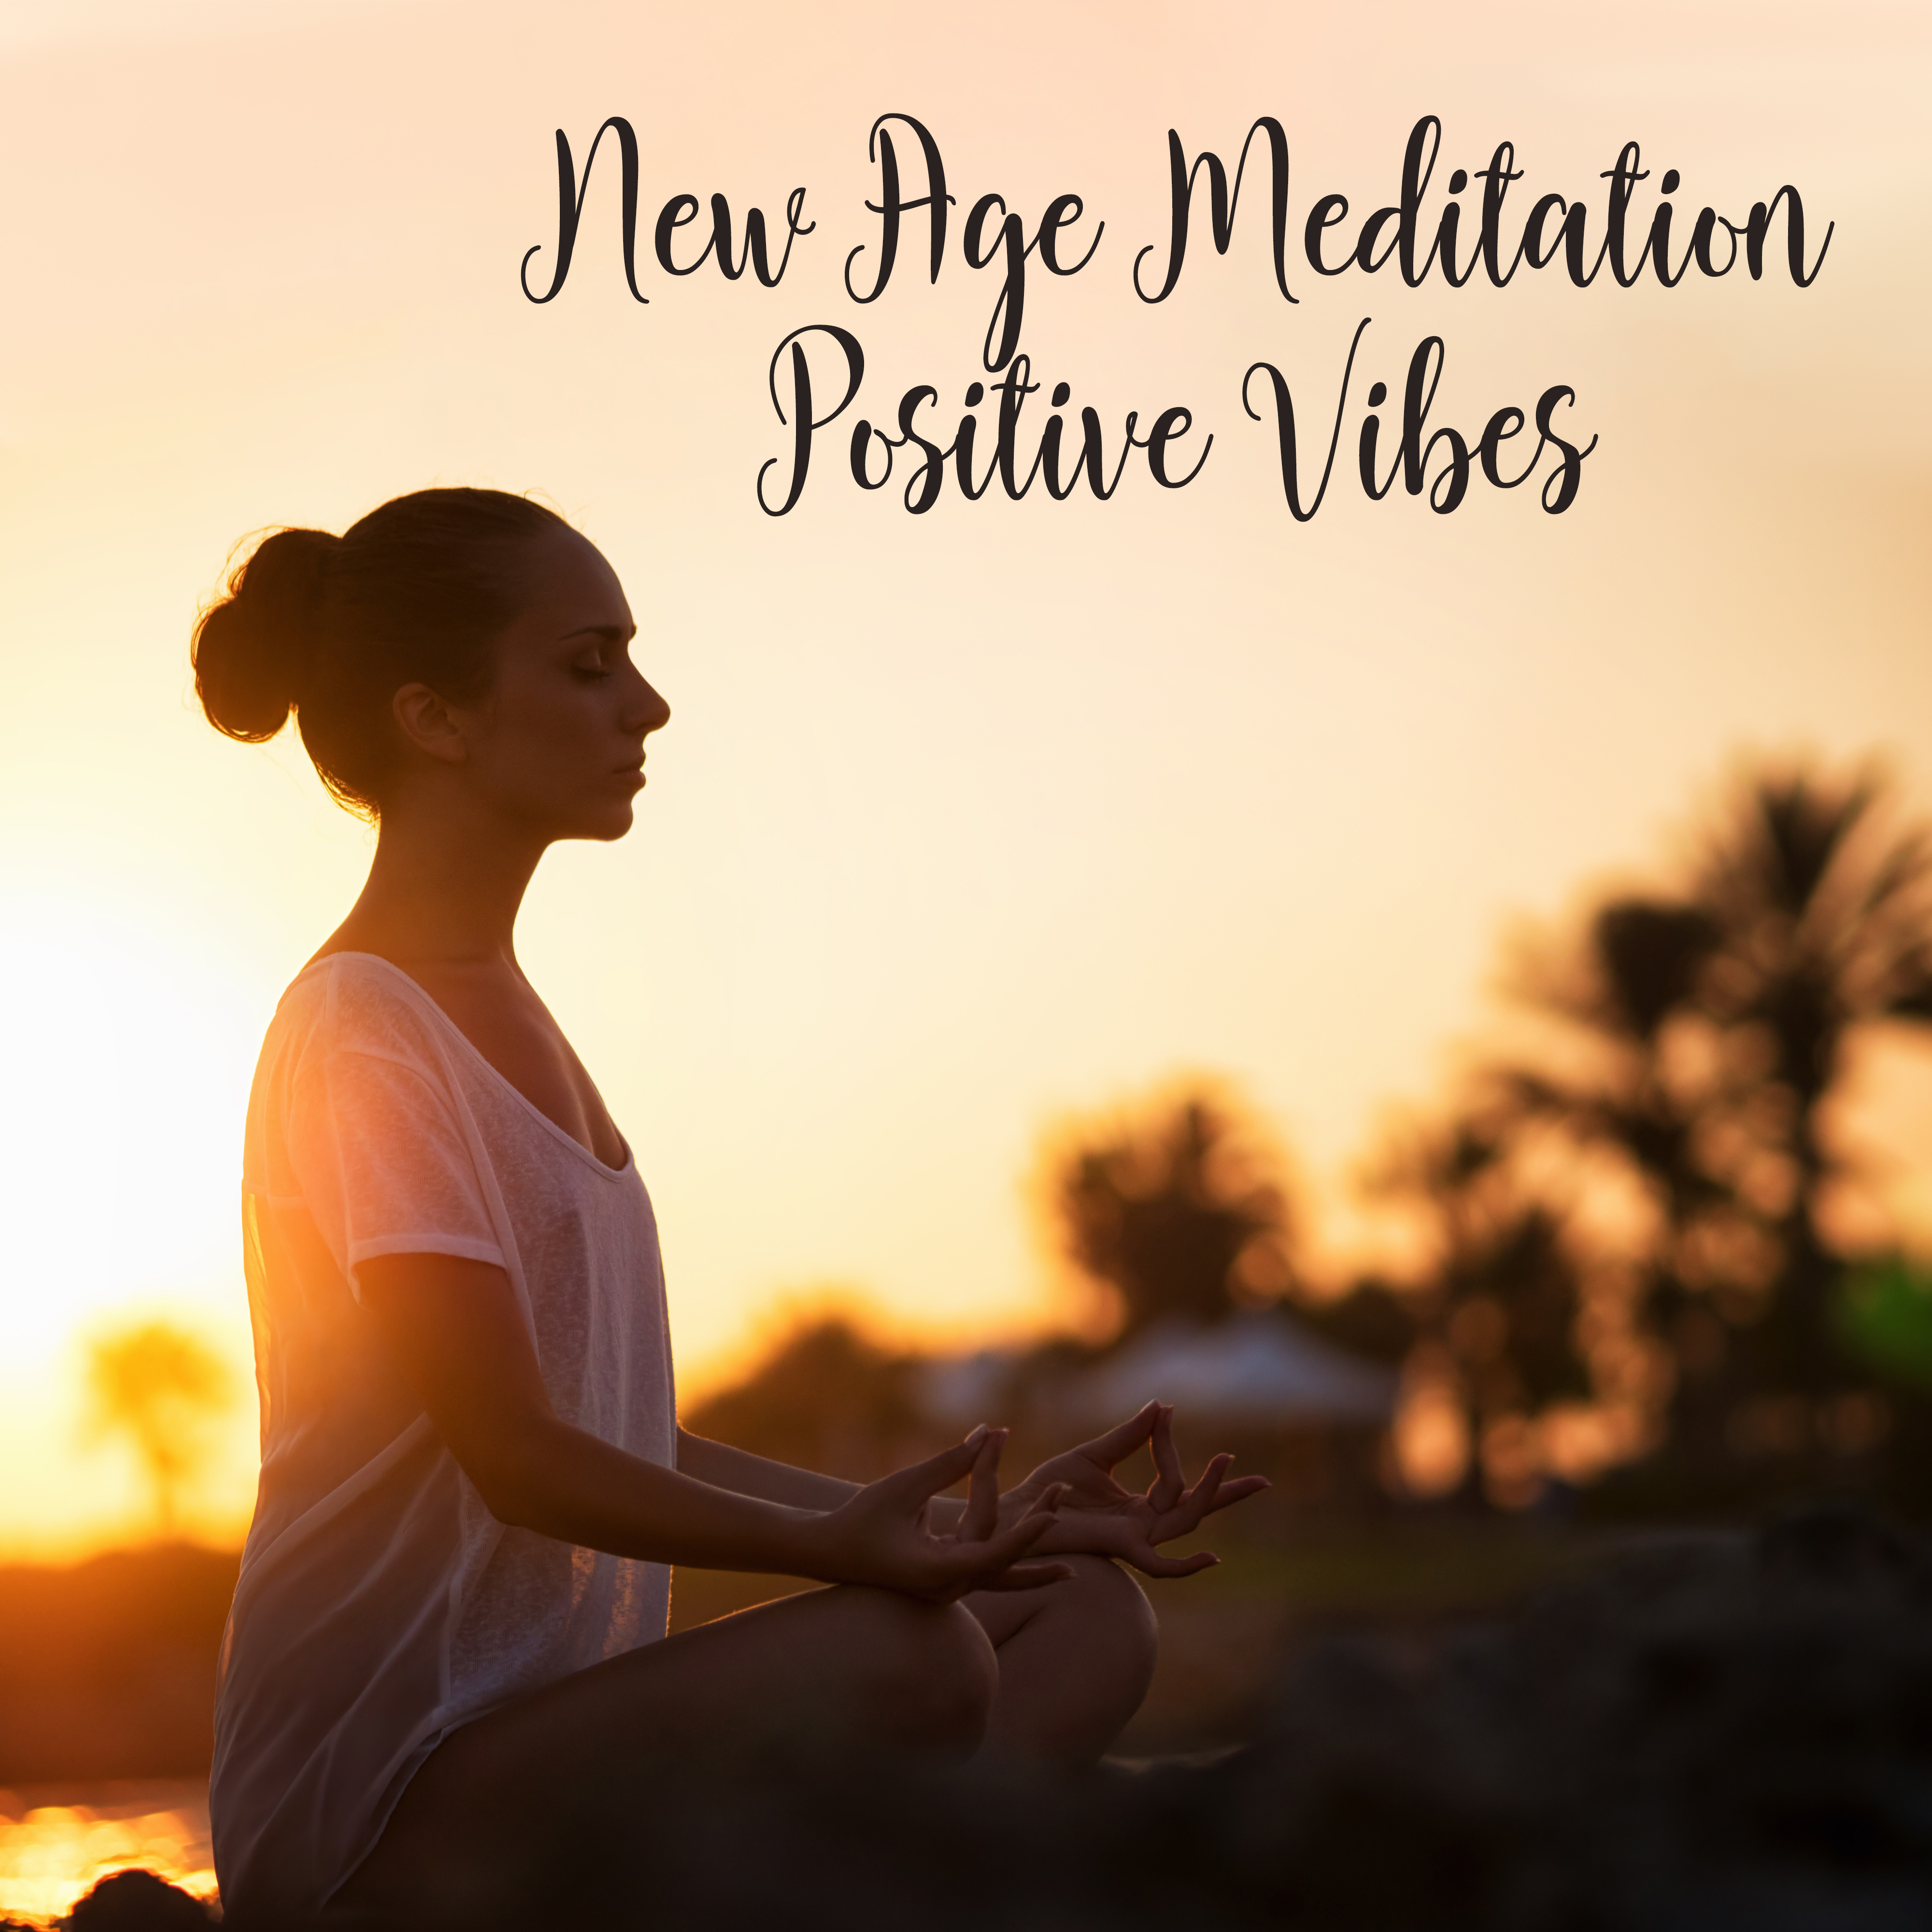 New Age Meditation Positive Vibes